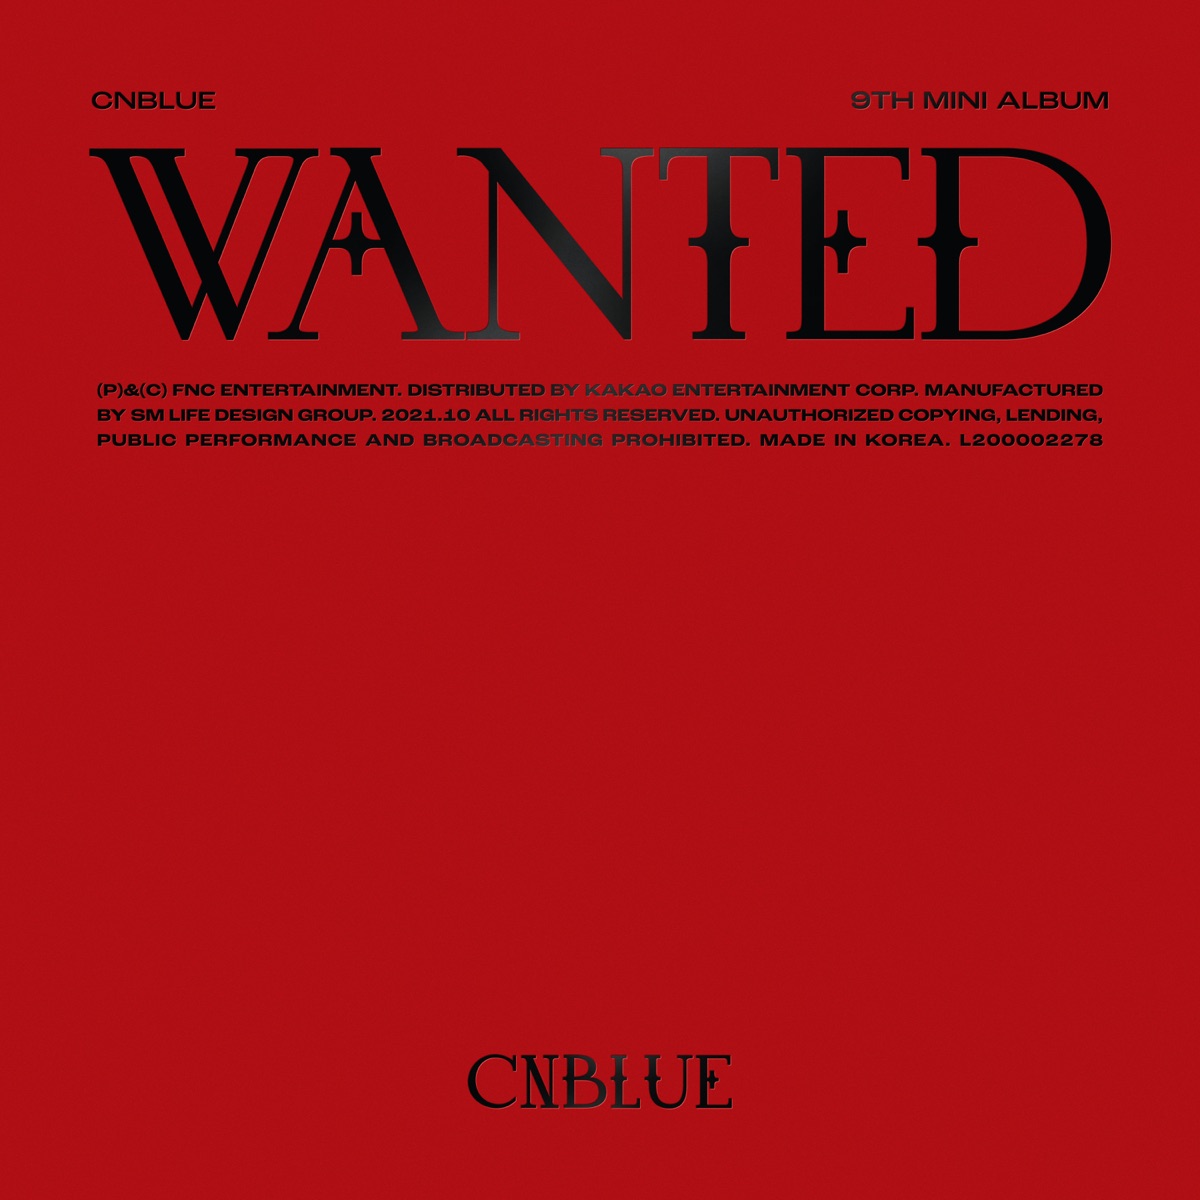 『CNBLUE - Love Cut 歌詞』収録の『WANTED』ジャケット